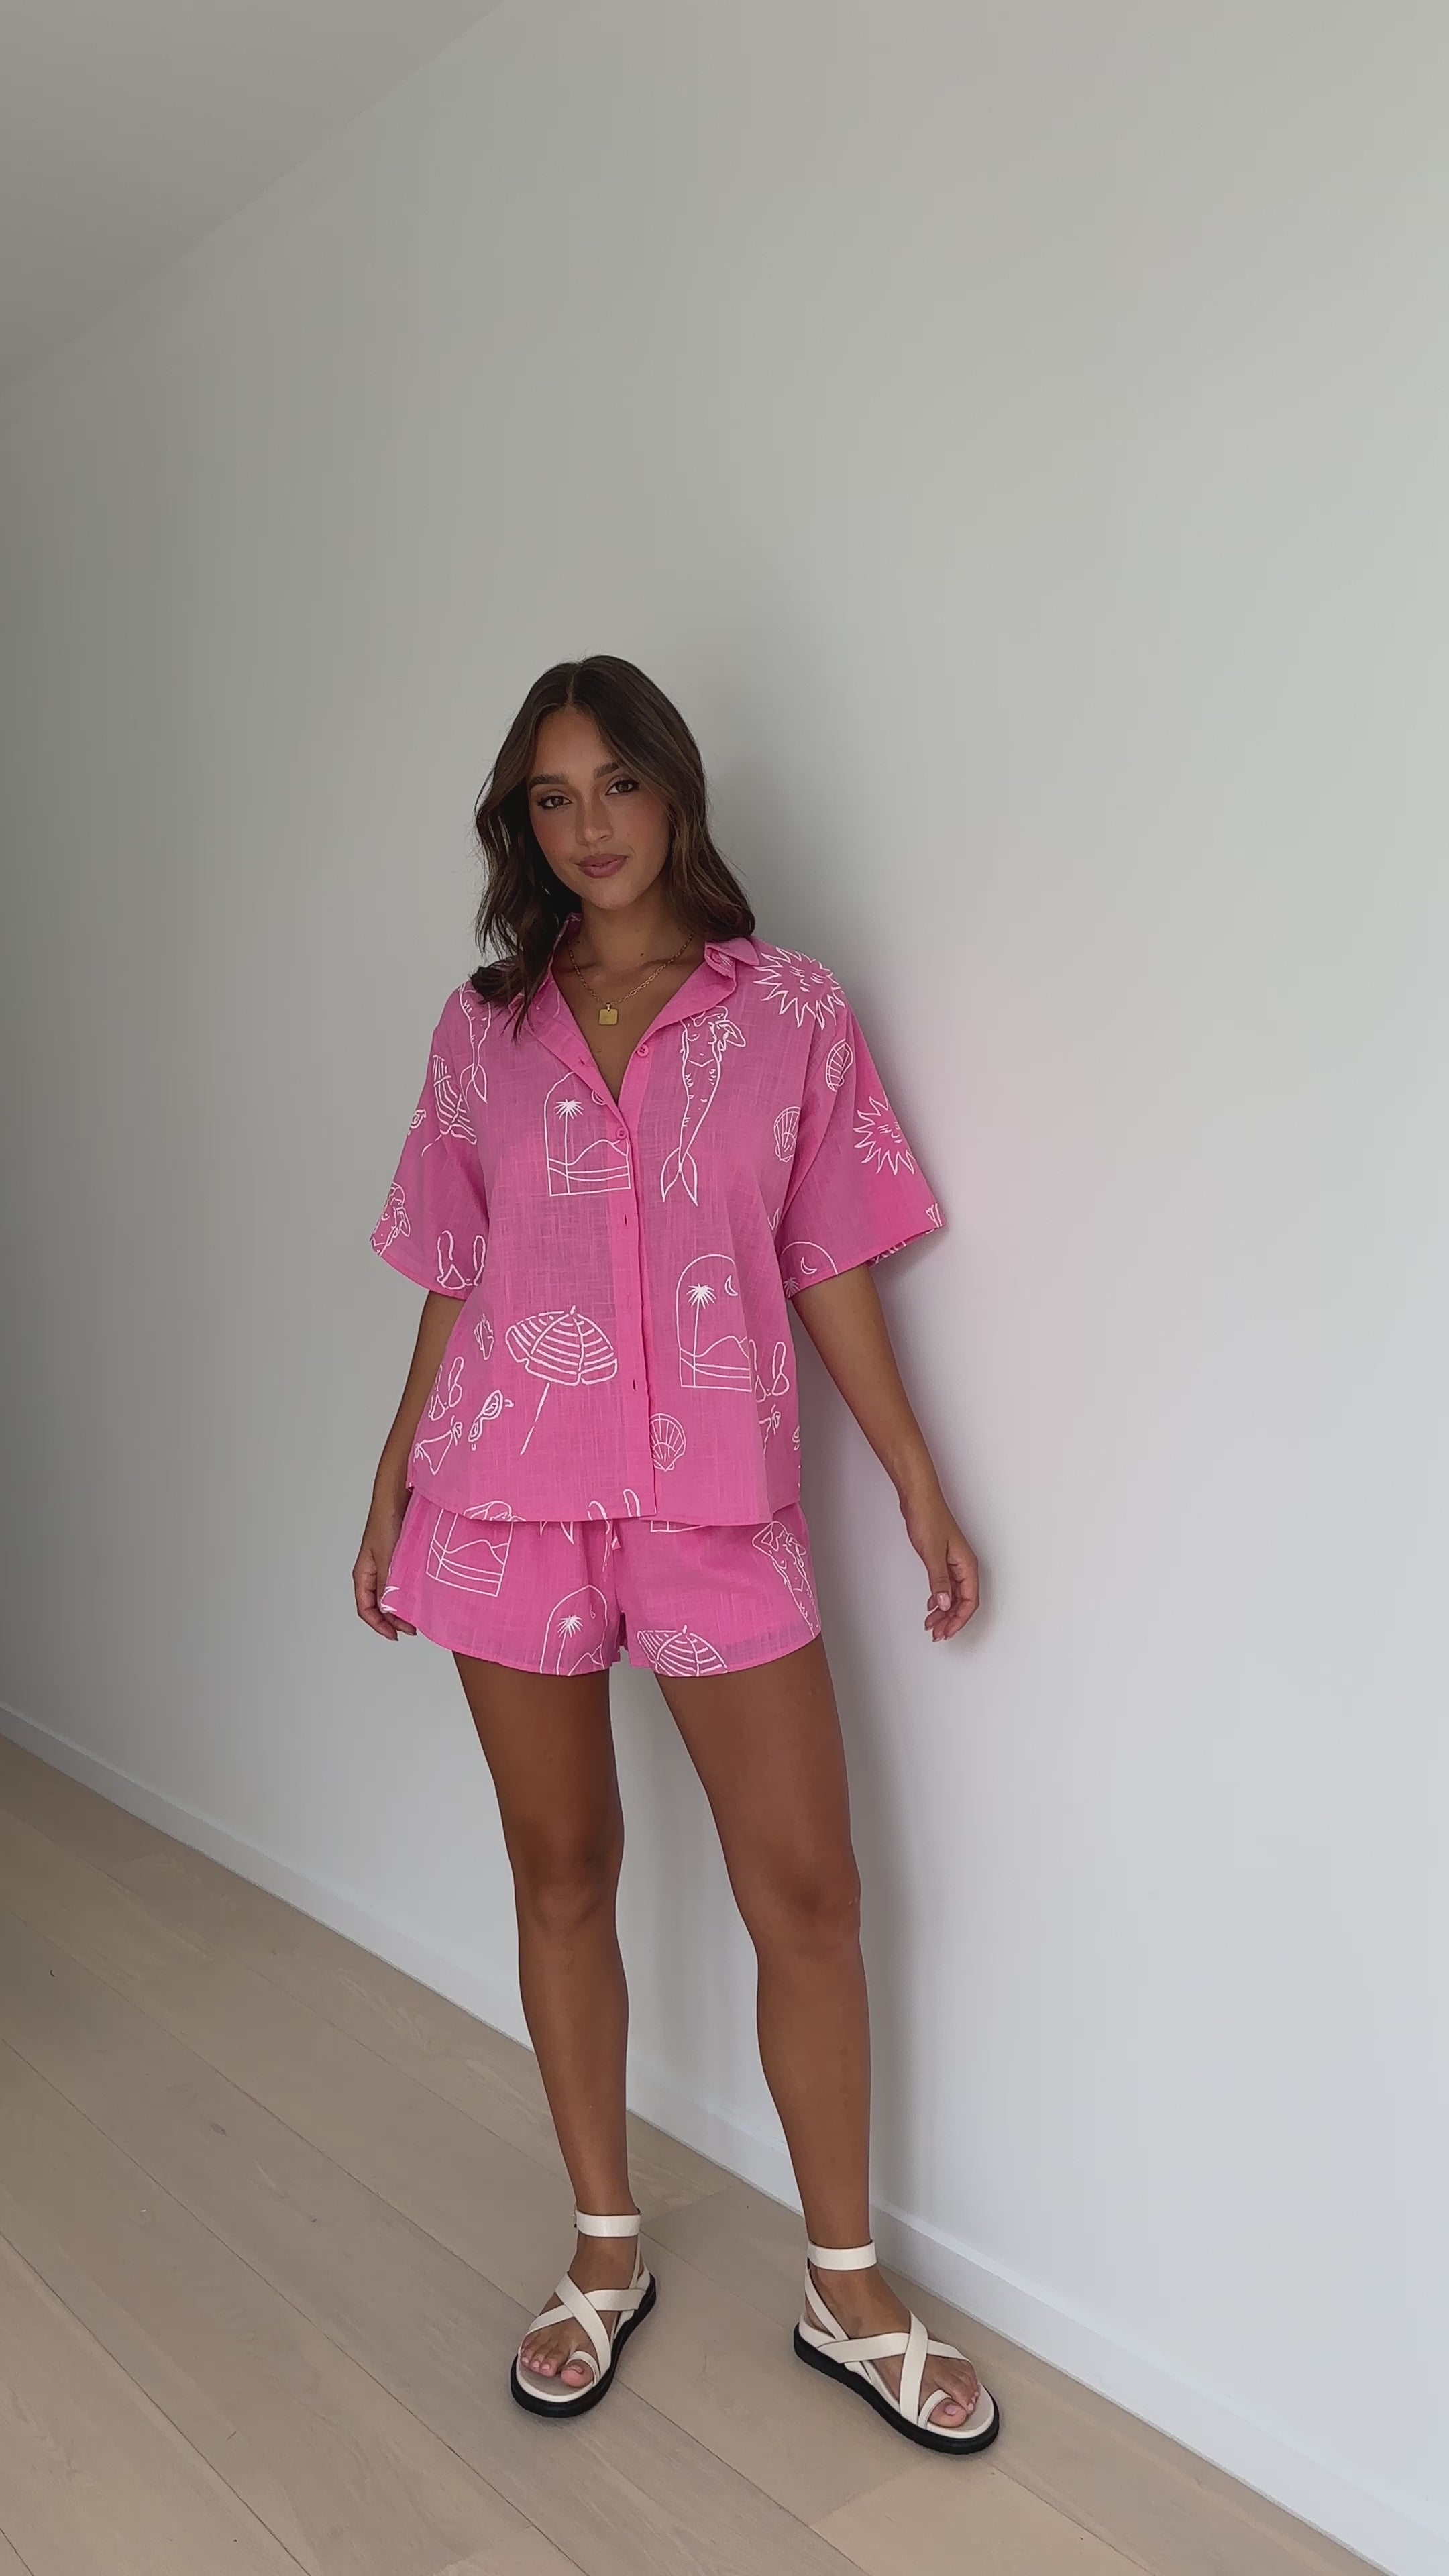 Charli Button Up Shirt and Shorts Set - Pink/White Mermaid Shell Print